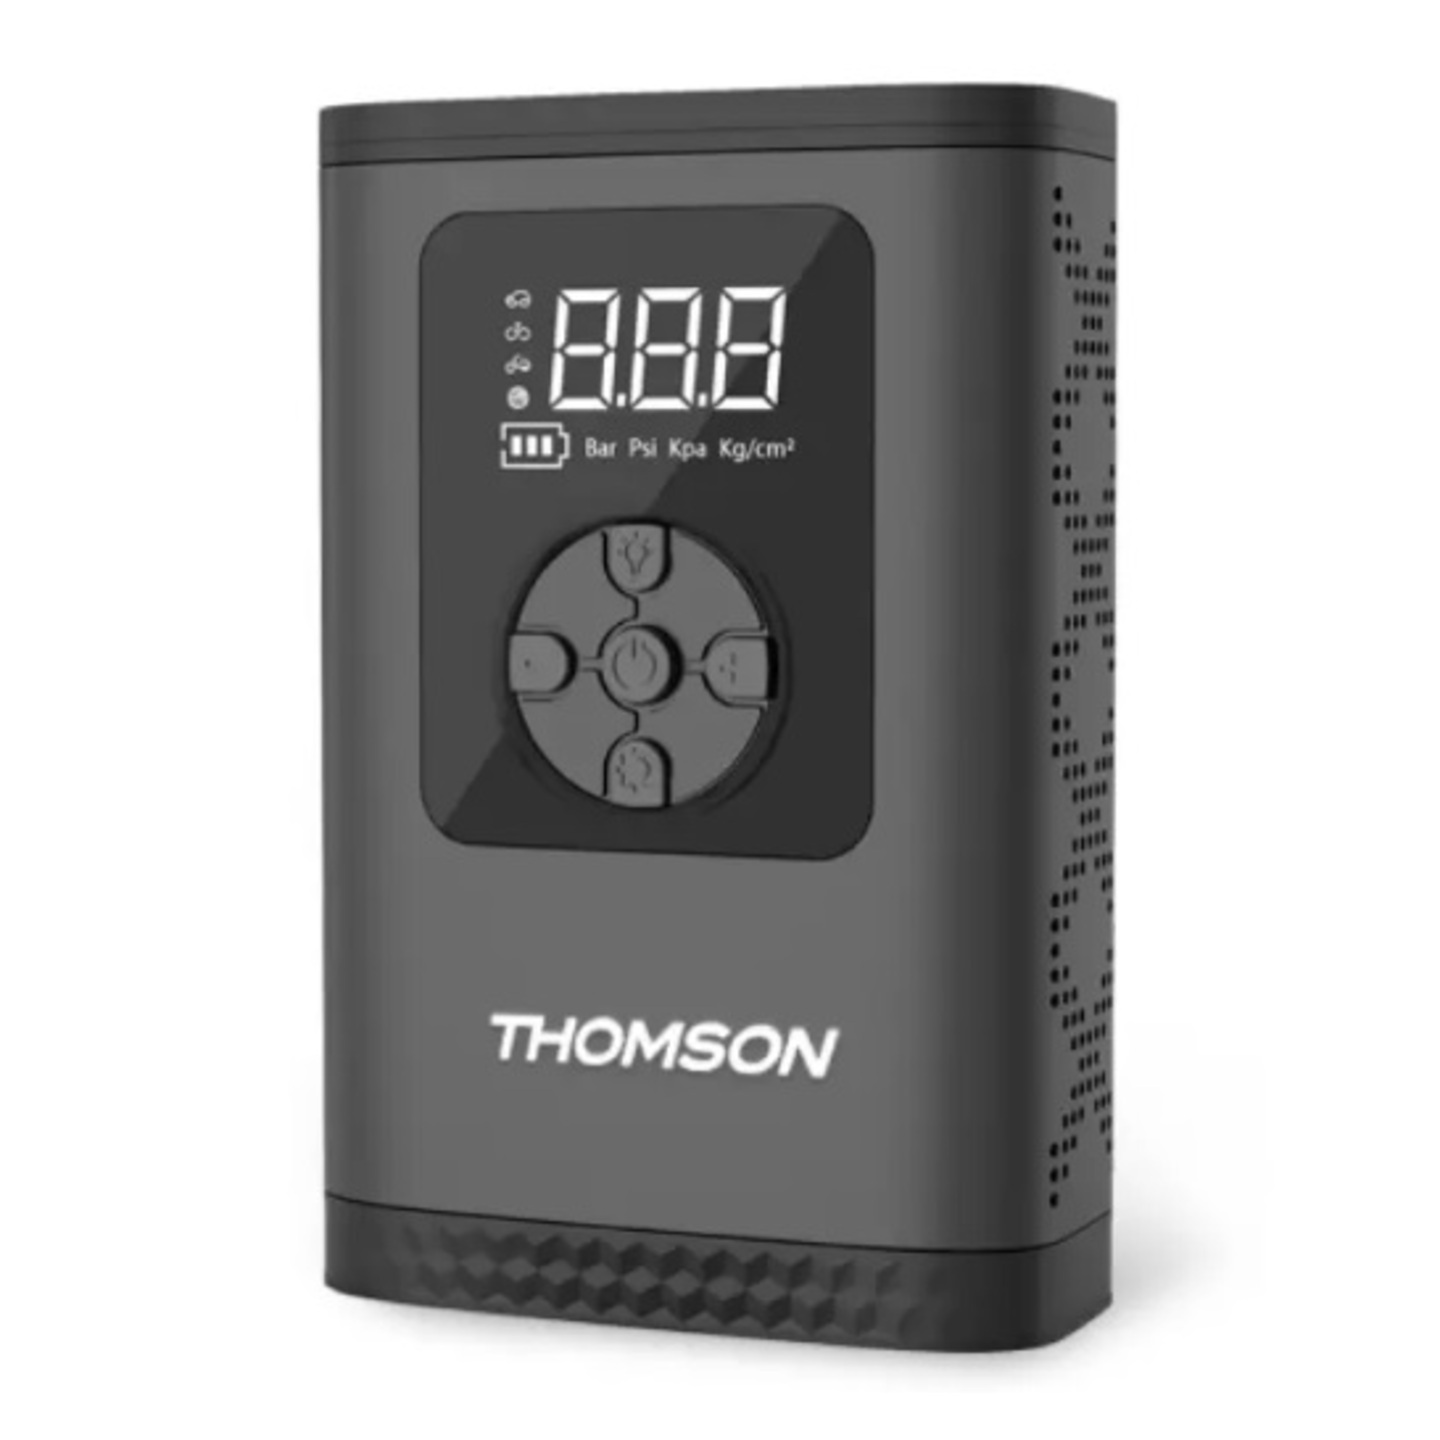 Thomson 150 PSI Digital Tyre Air Pump for Car & Bike